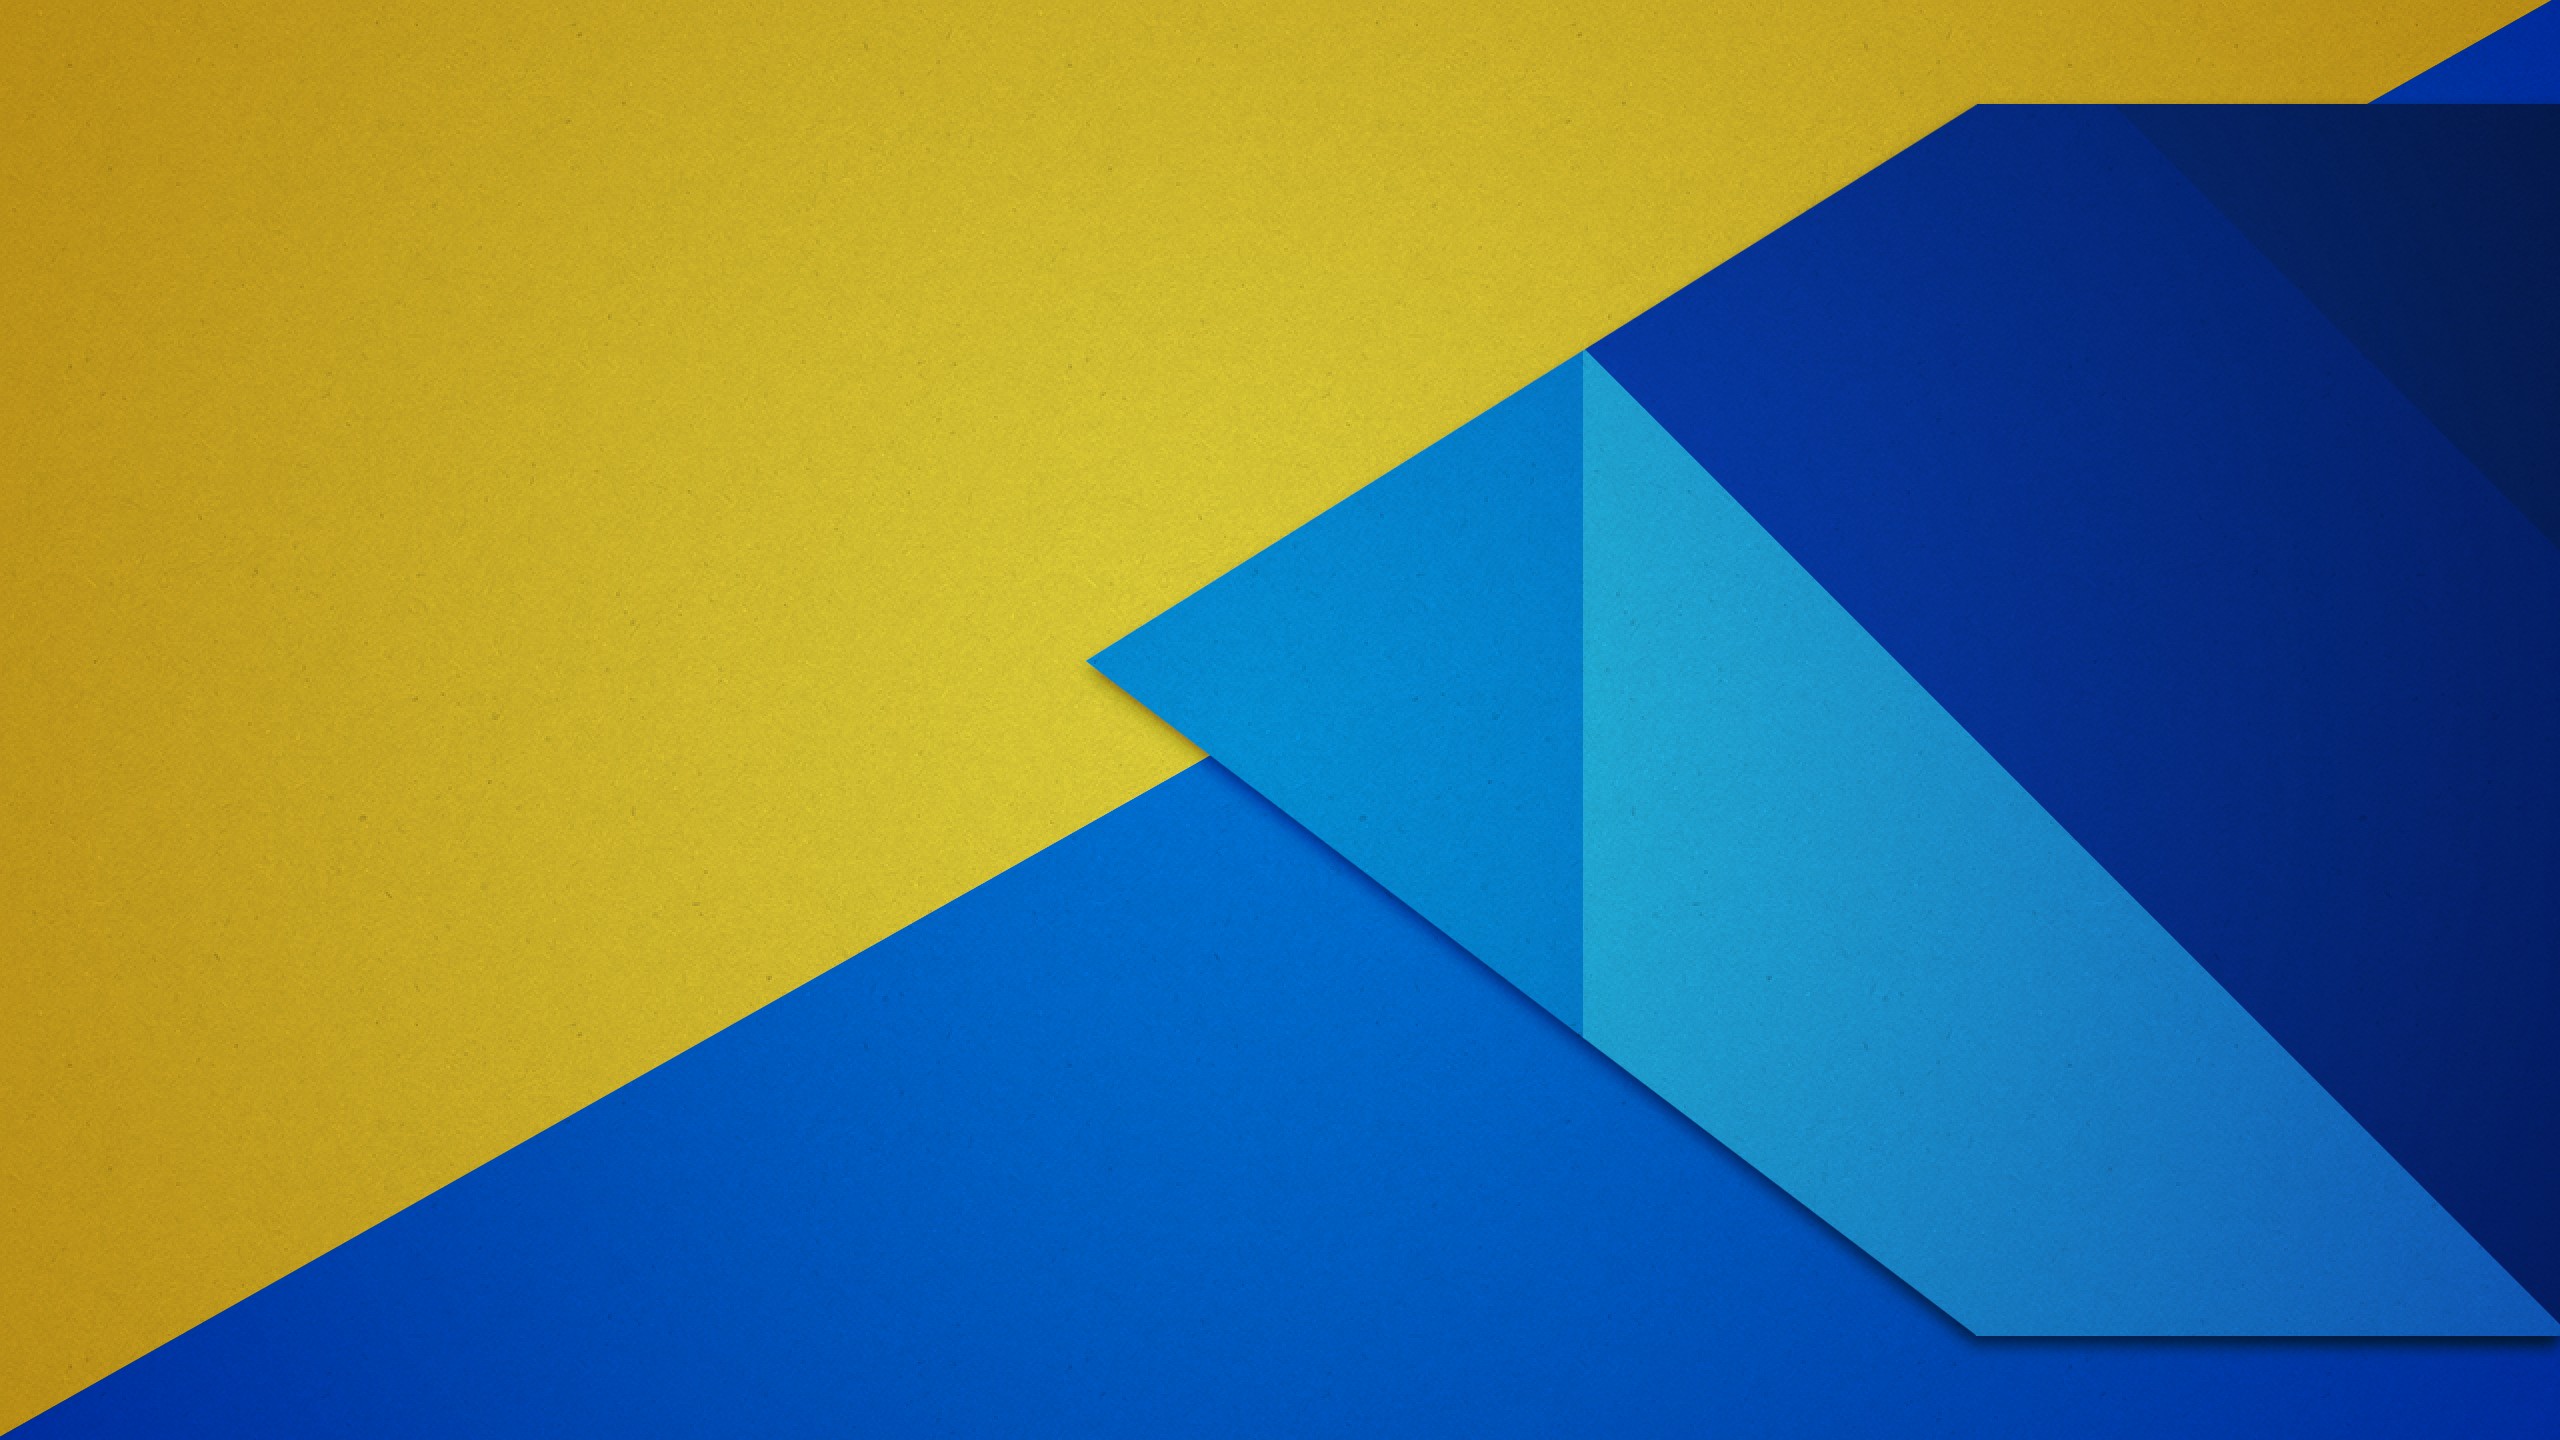 android marshmallow wallpaper 1080p,blau,gelb,kobaltblau,türkis,linie